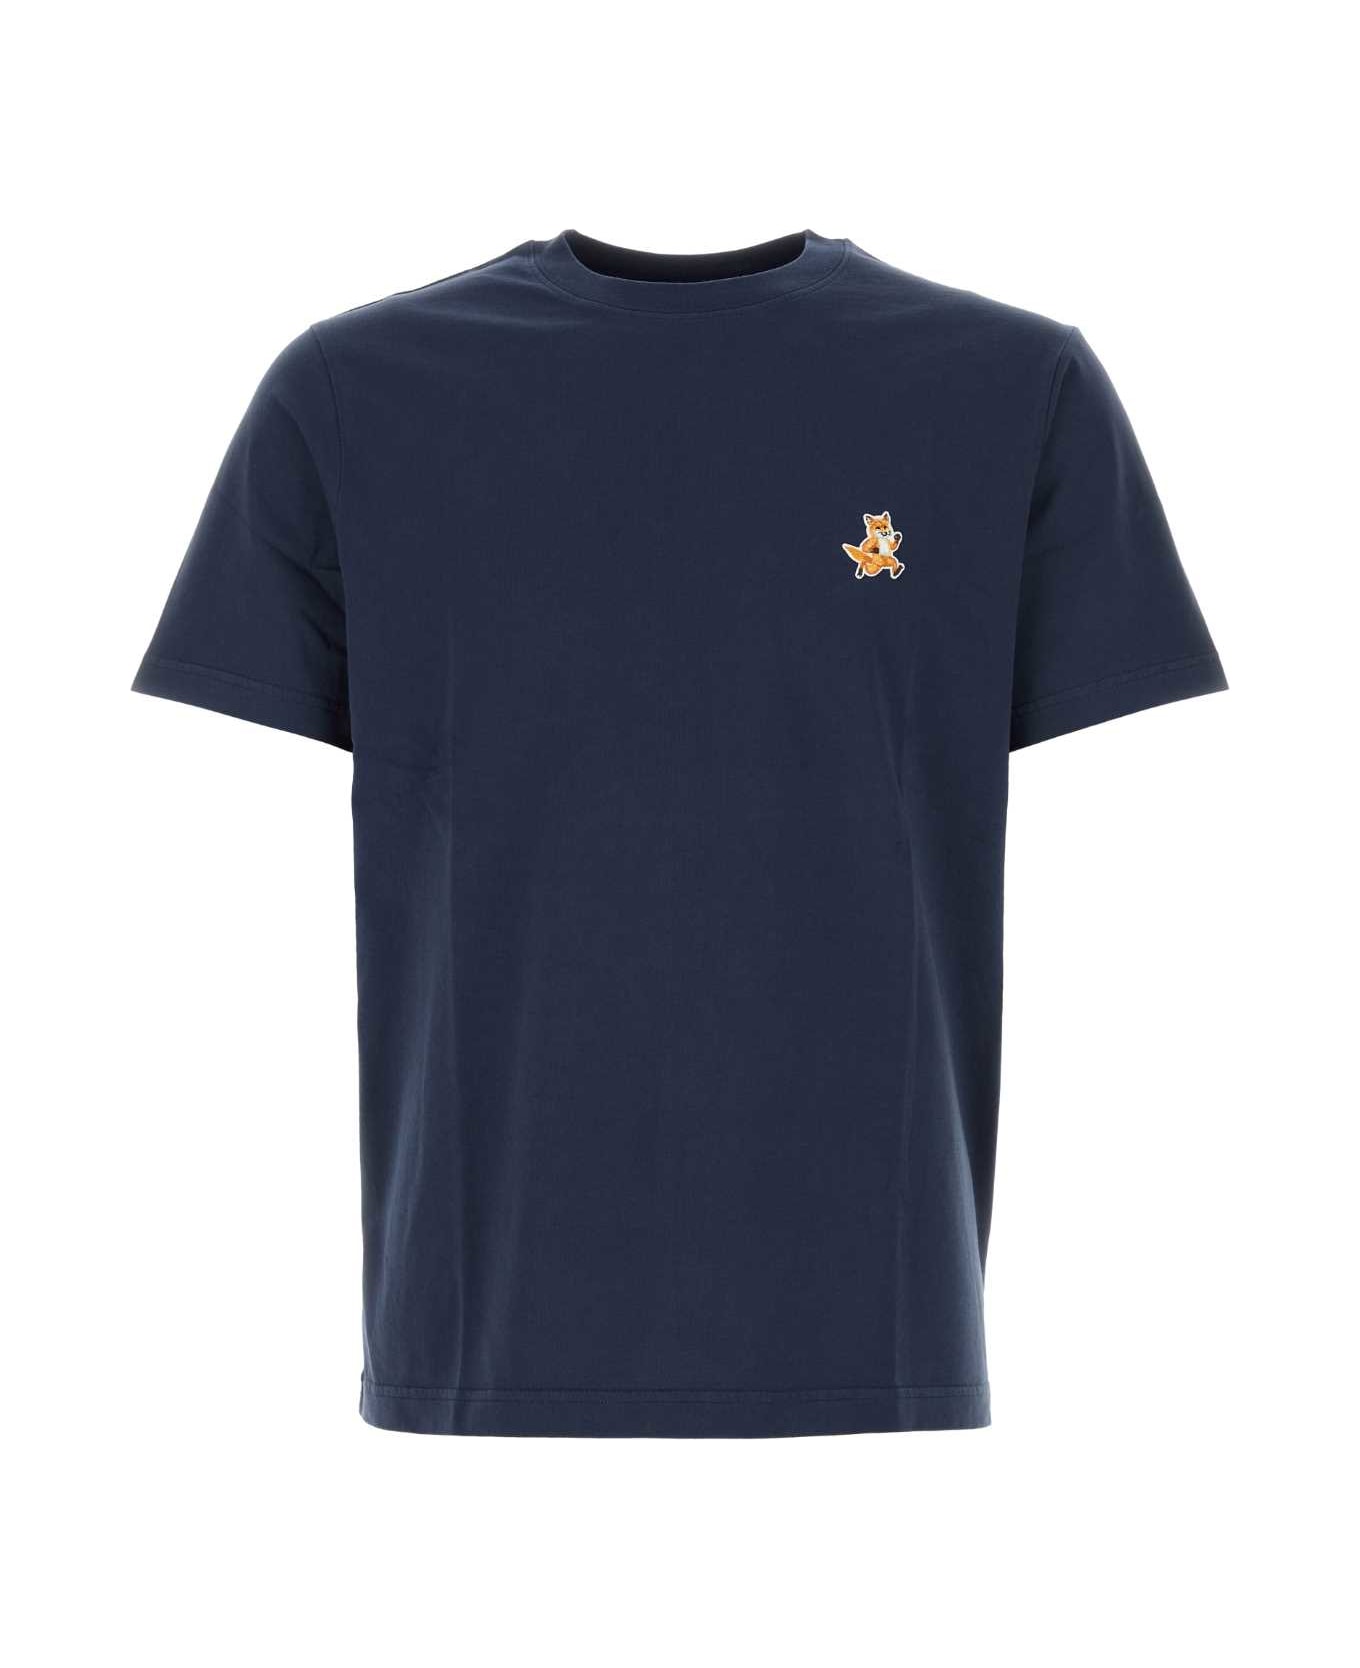 Maison Kitsuné Navy Blue Cotton T-shirt - INKBLUE シャツ